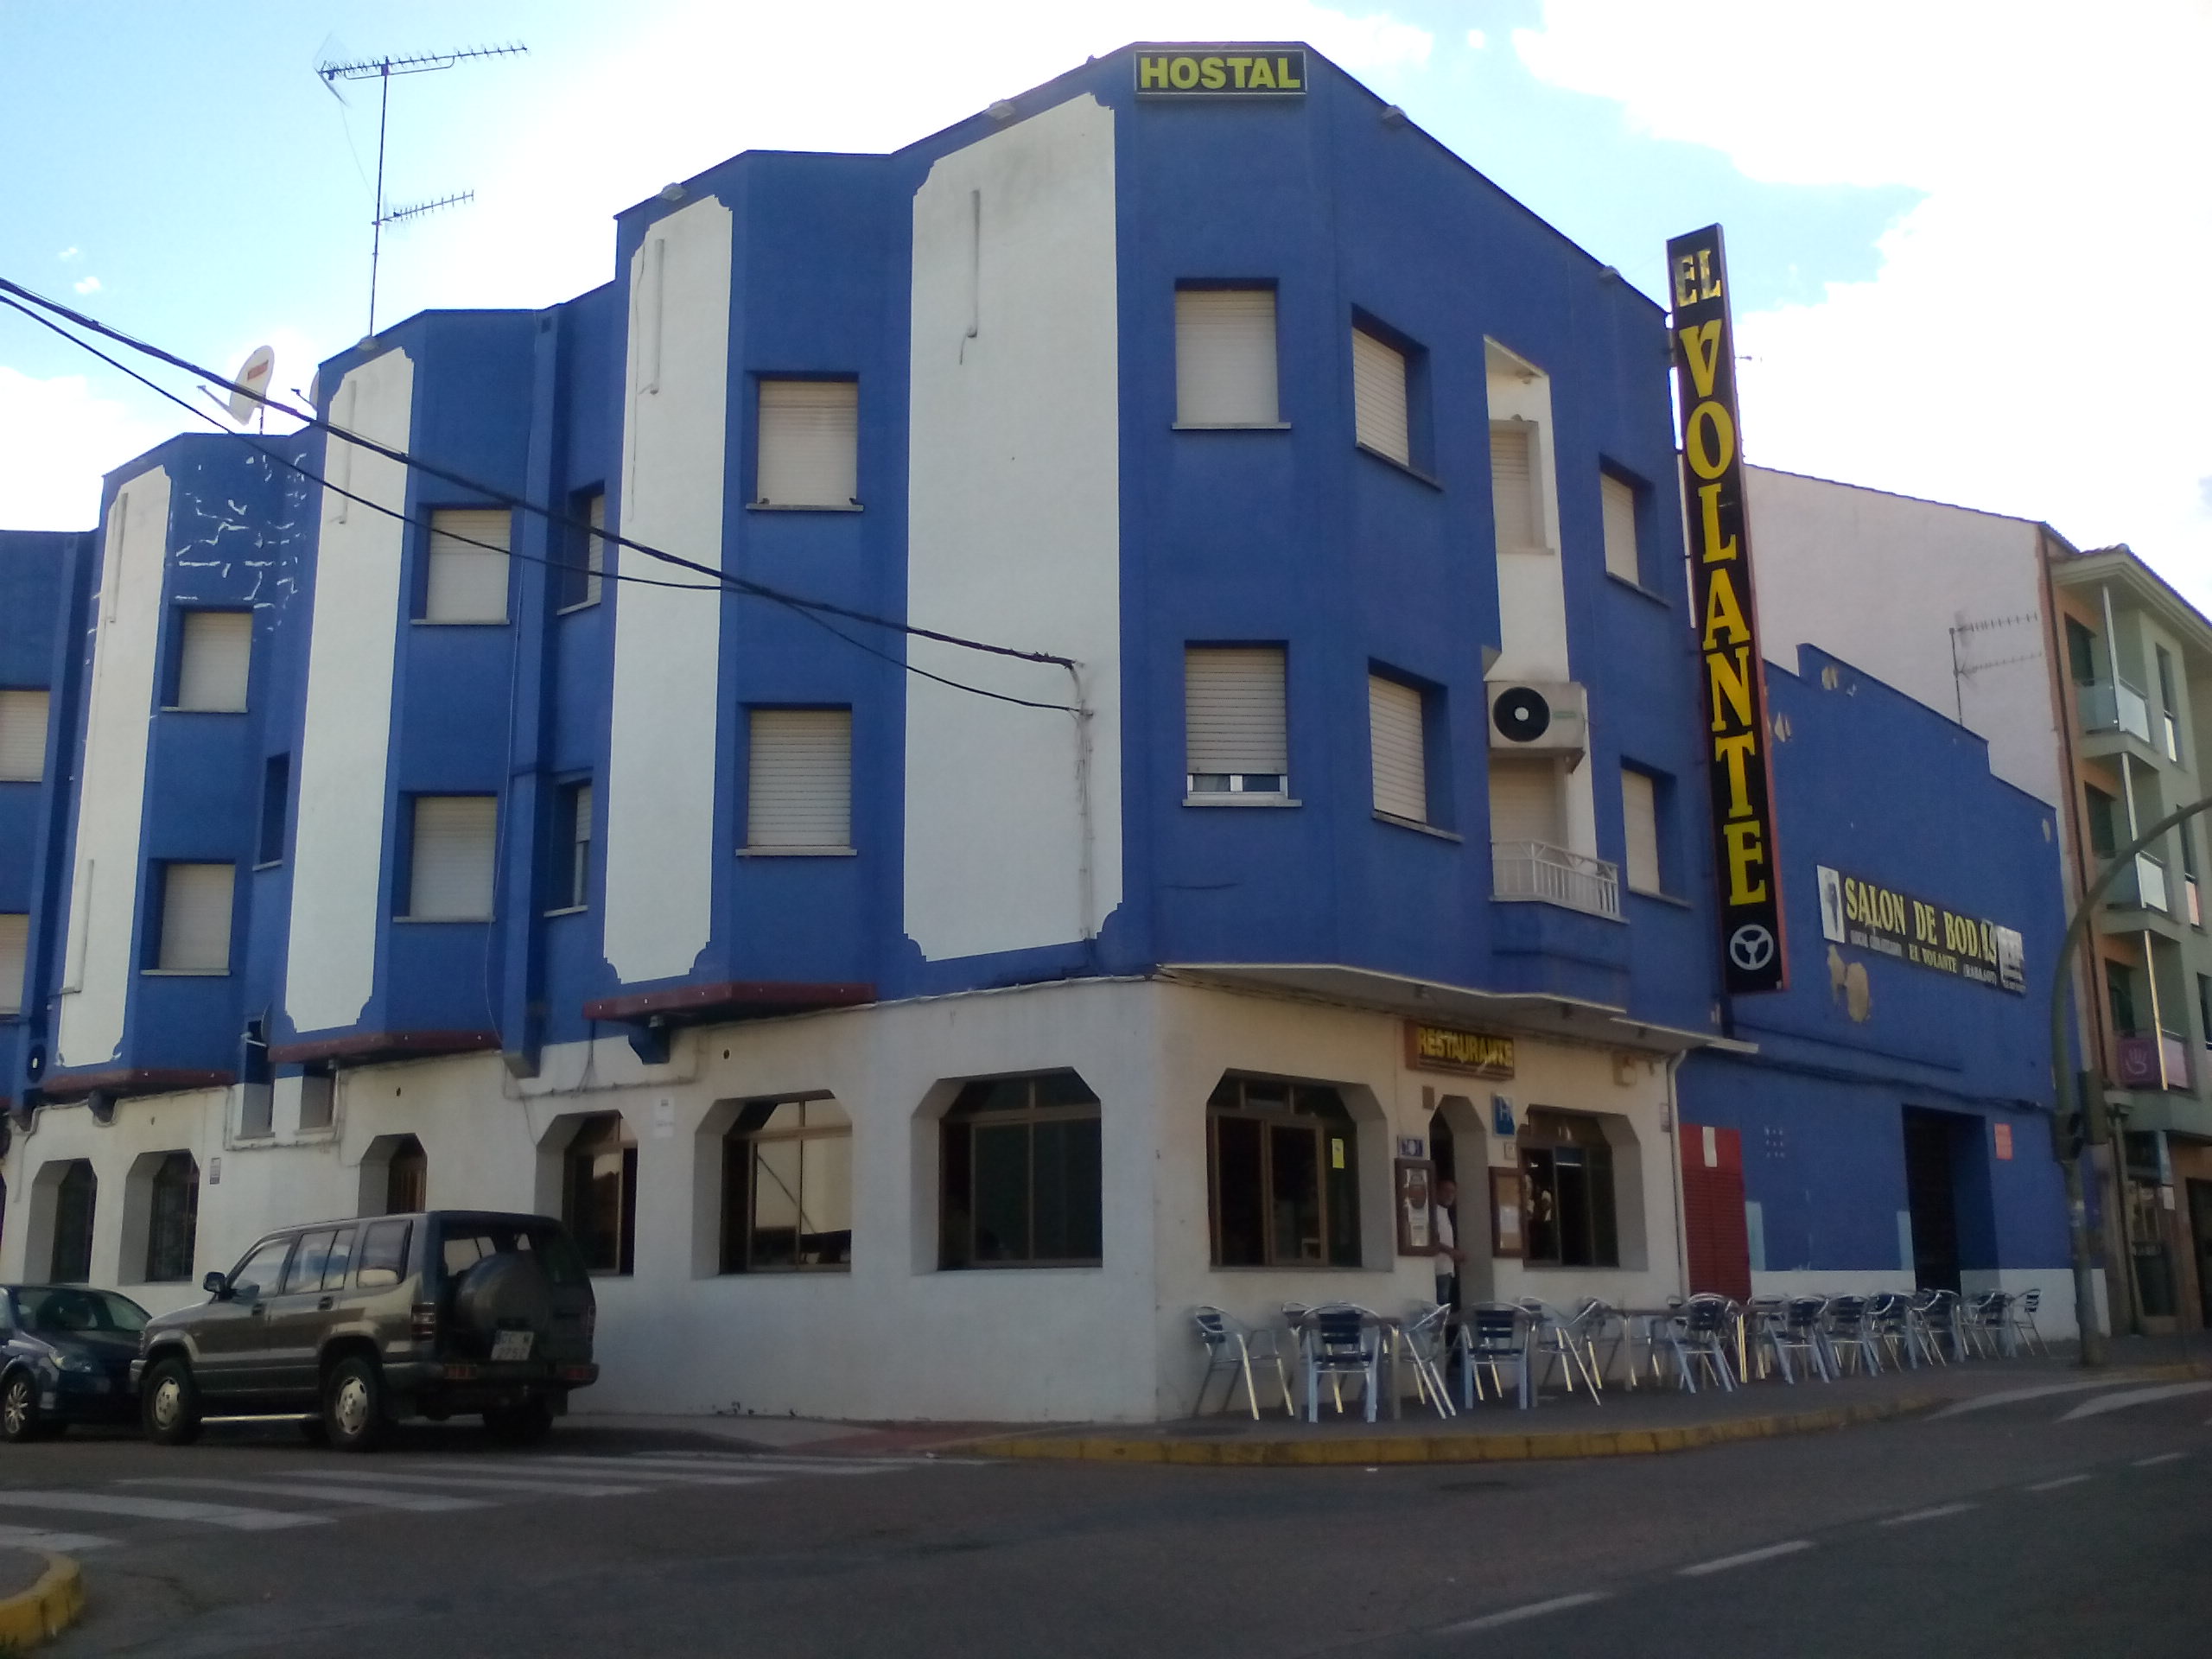 Hostal restaurante Moraleja El Volante